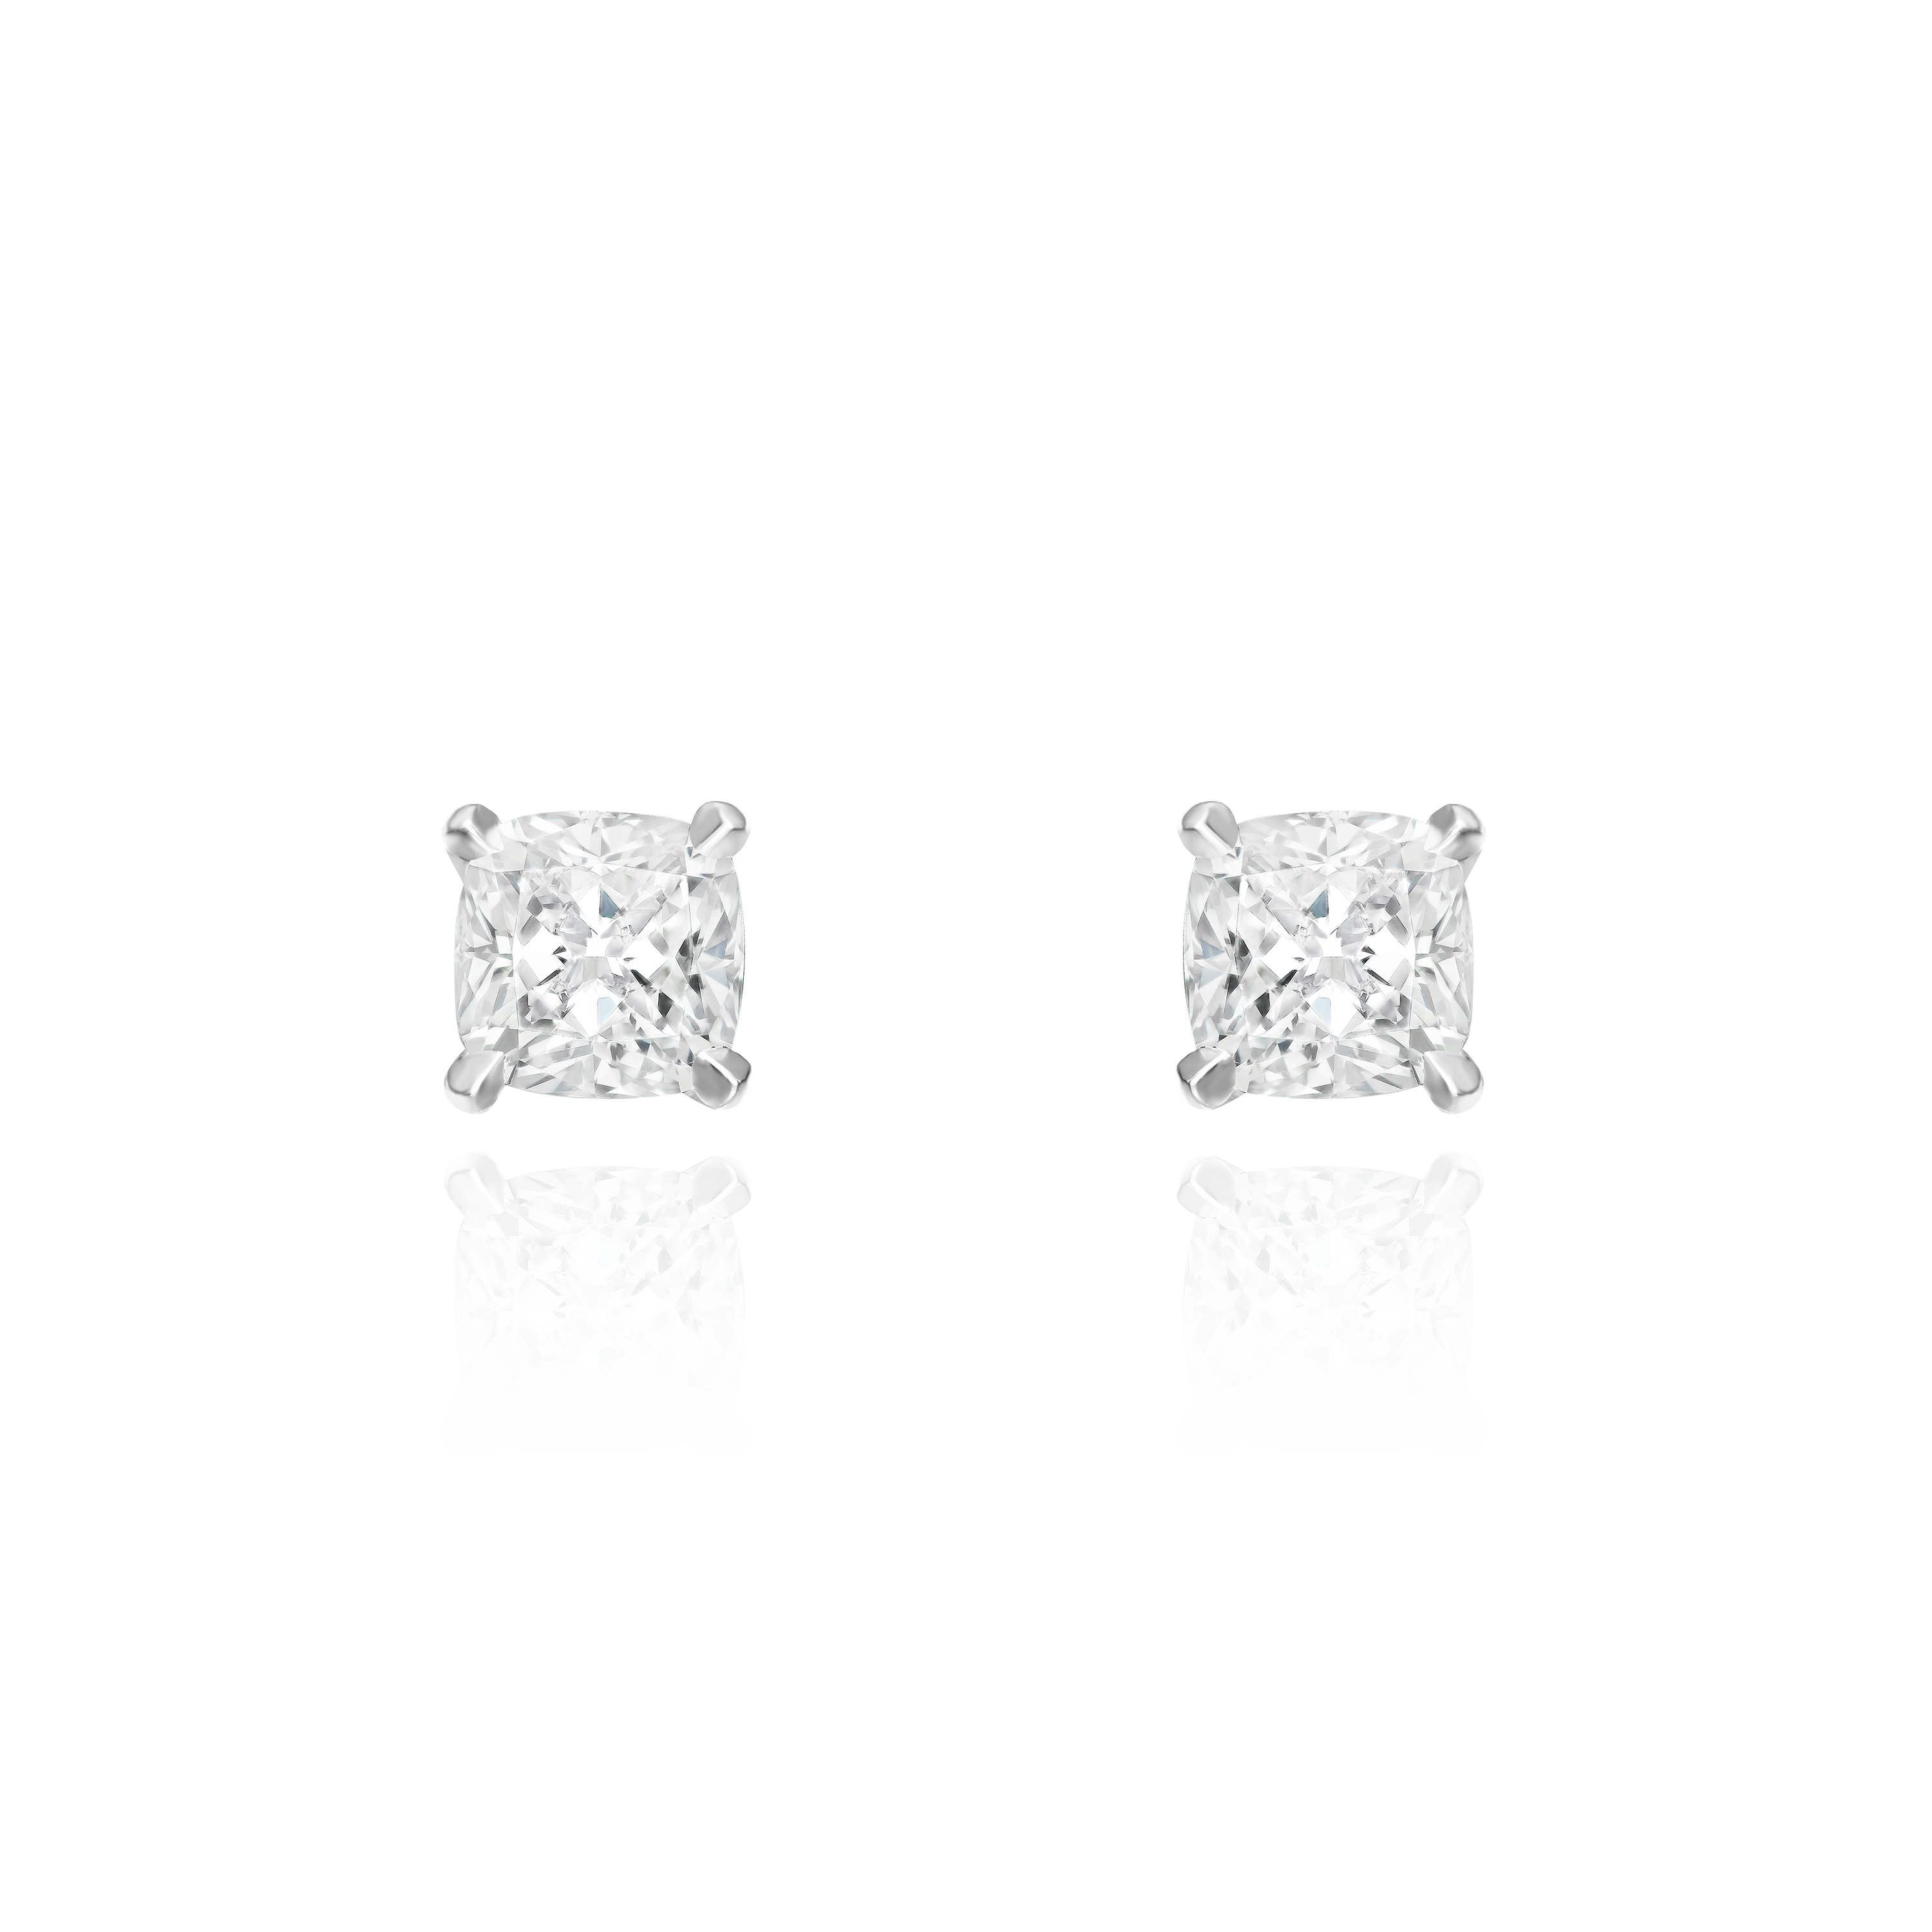 1.43cts Square Cushion Cut Diamond Earrings